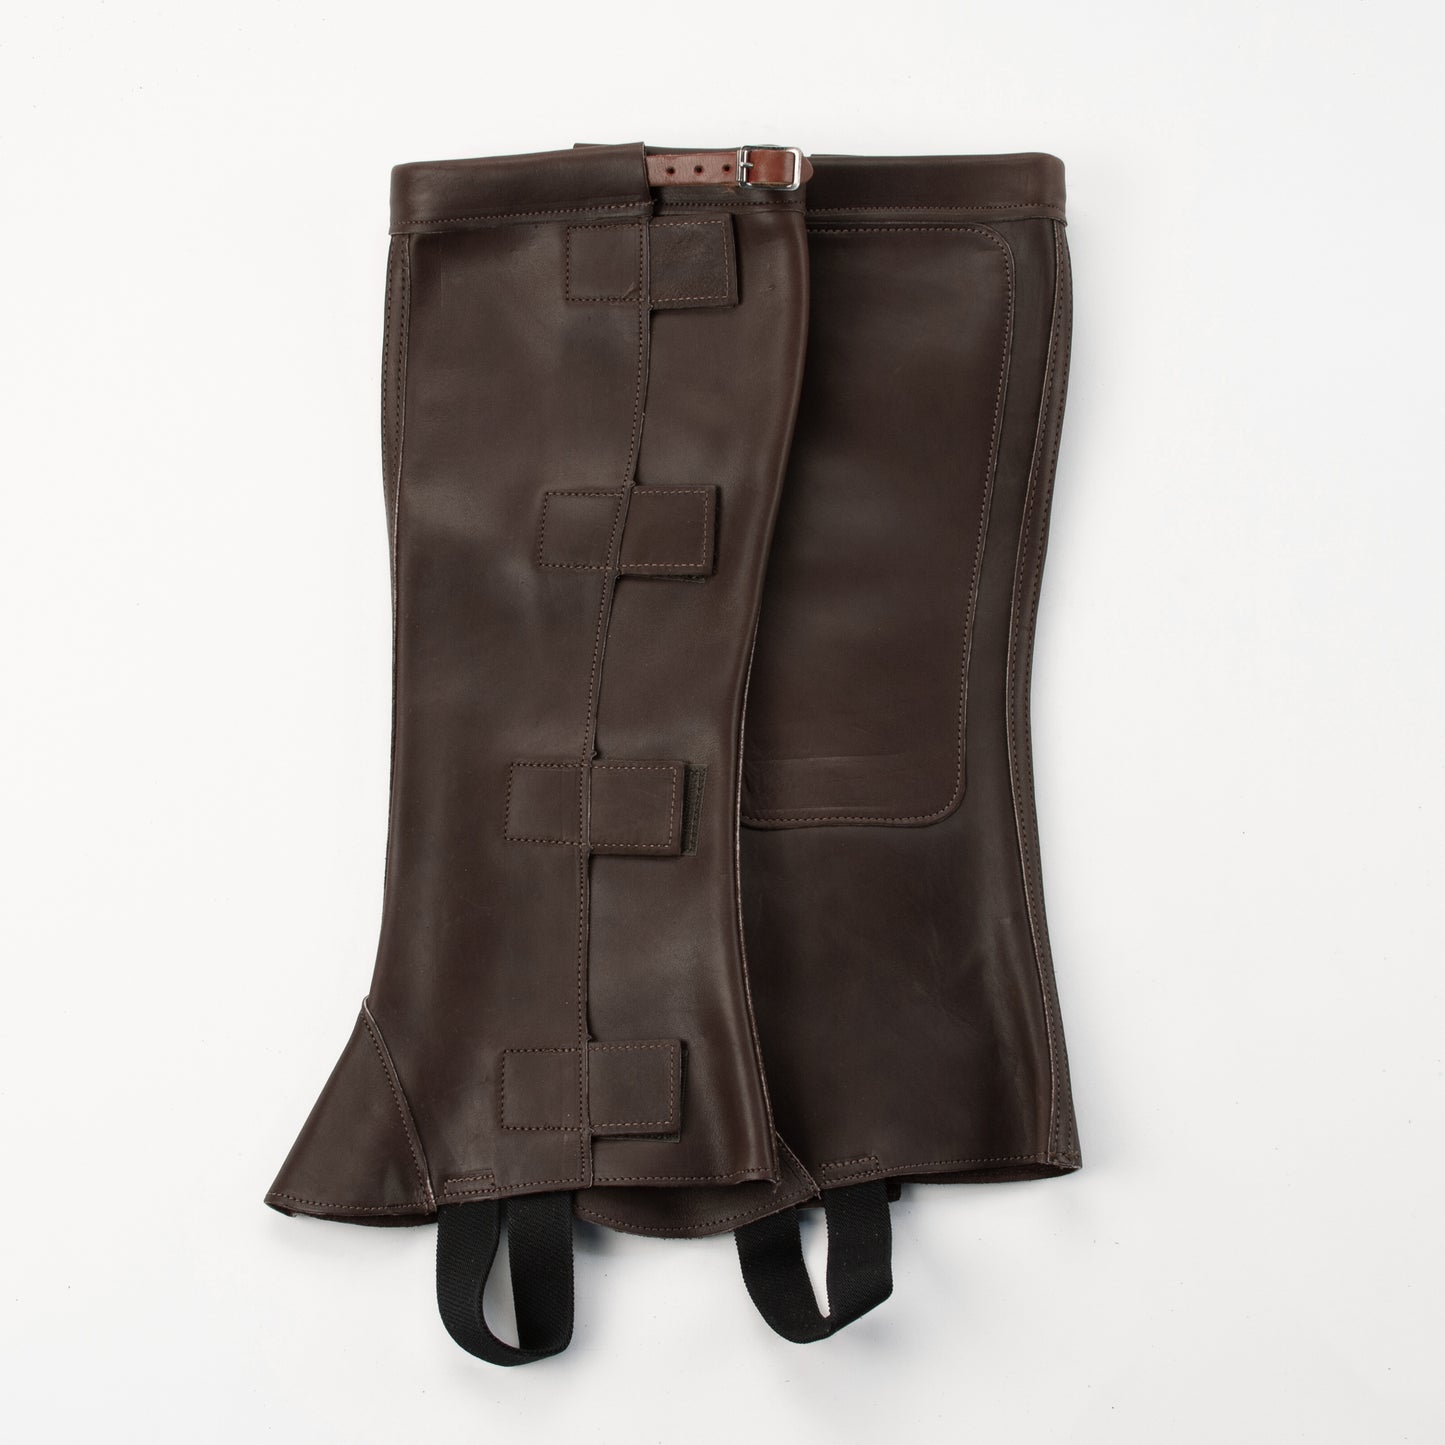 Half Chaps - Brown Top Grain Leather - Velcro & Buckle Closure with Orange Strap